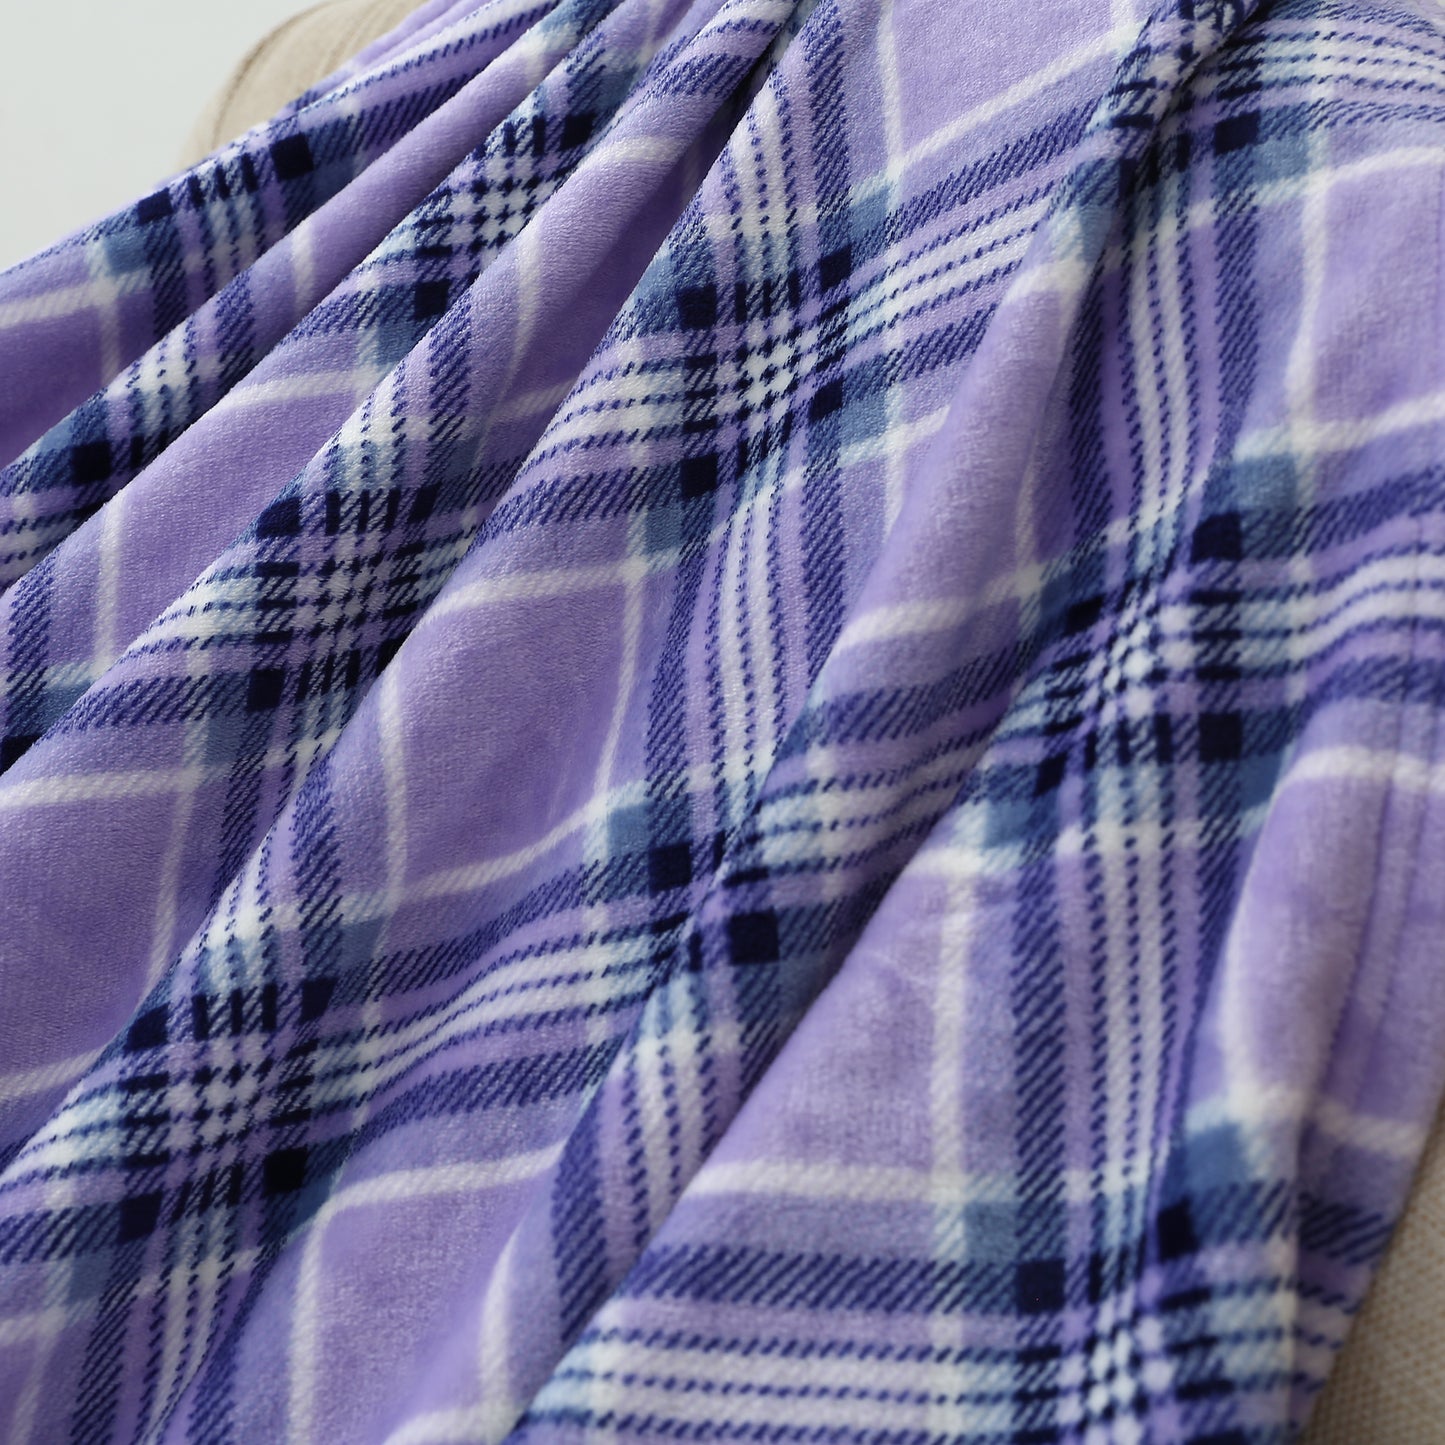 RONGTAI Purple Grid Fleece Throw Blanket for Sofa Bed